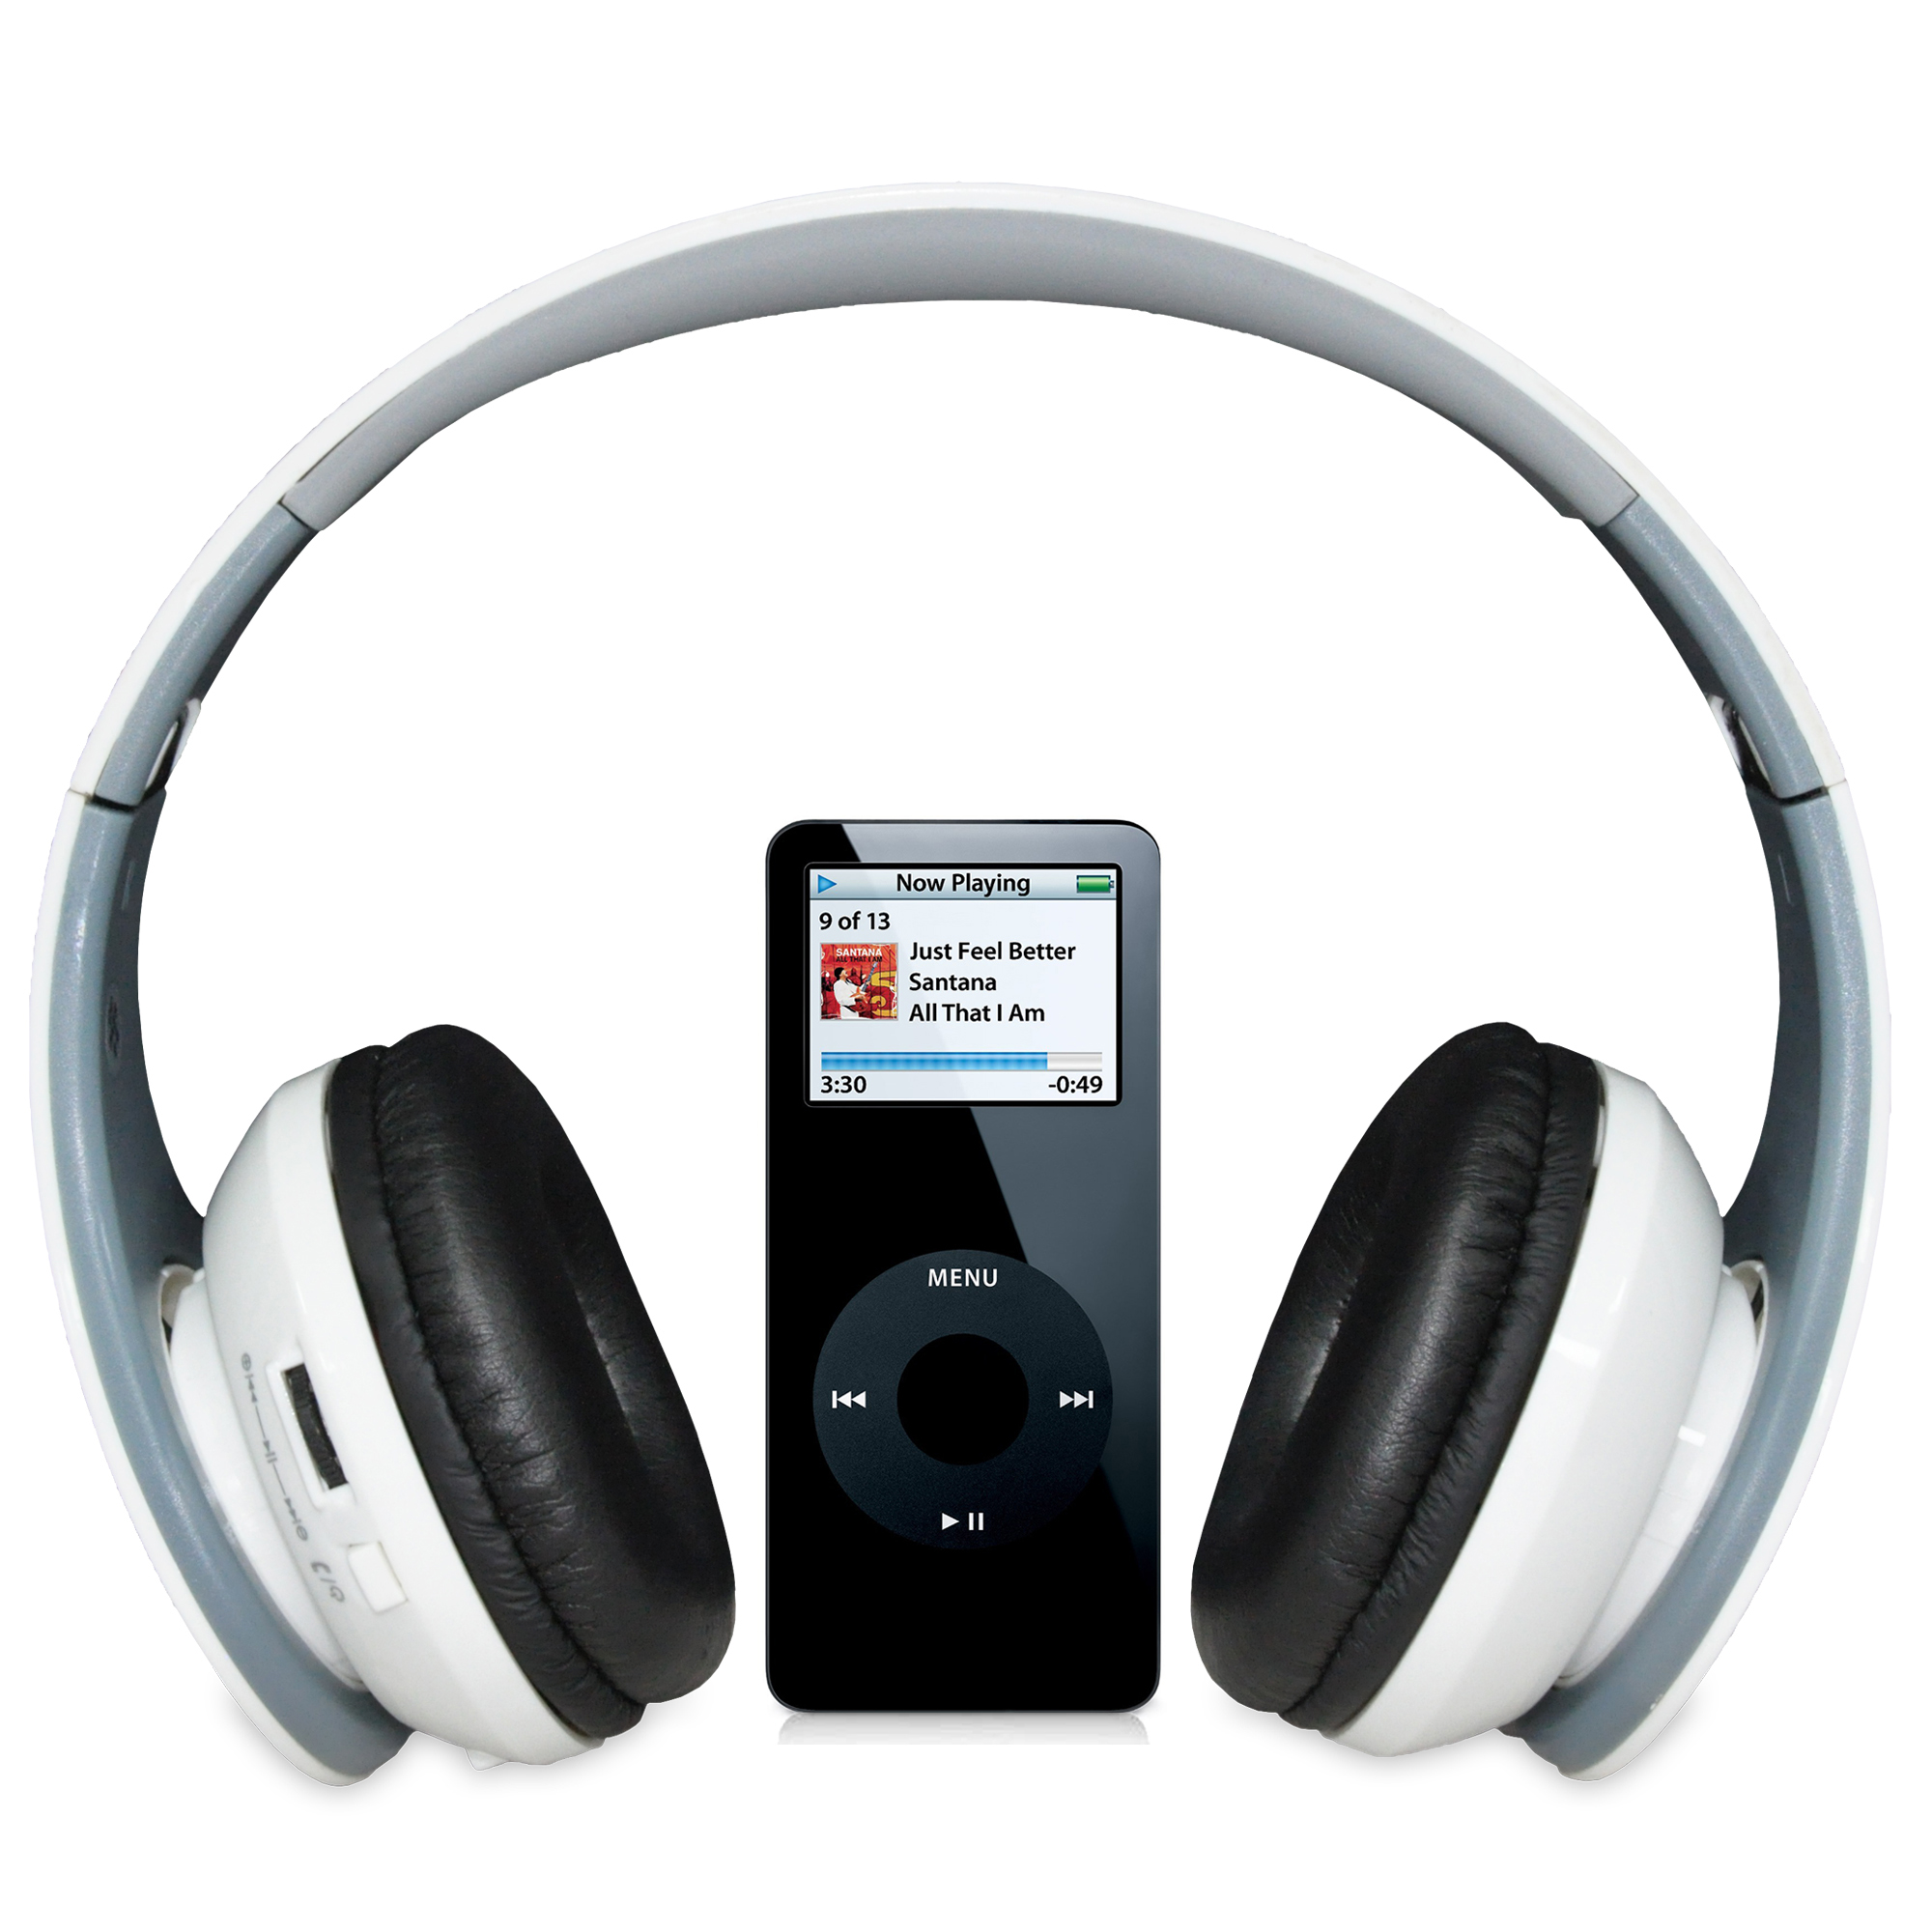 TM-16-Bluetooth headphone Super Bass Smart Speakers Handsfree With Mic FM Radio Support TF/SD Card